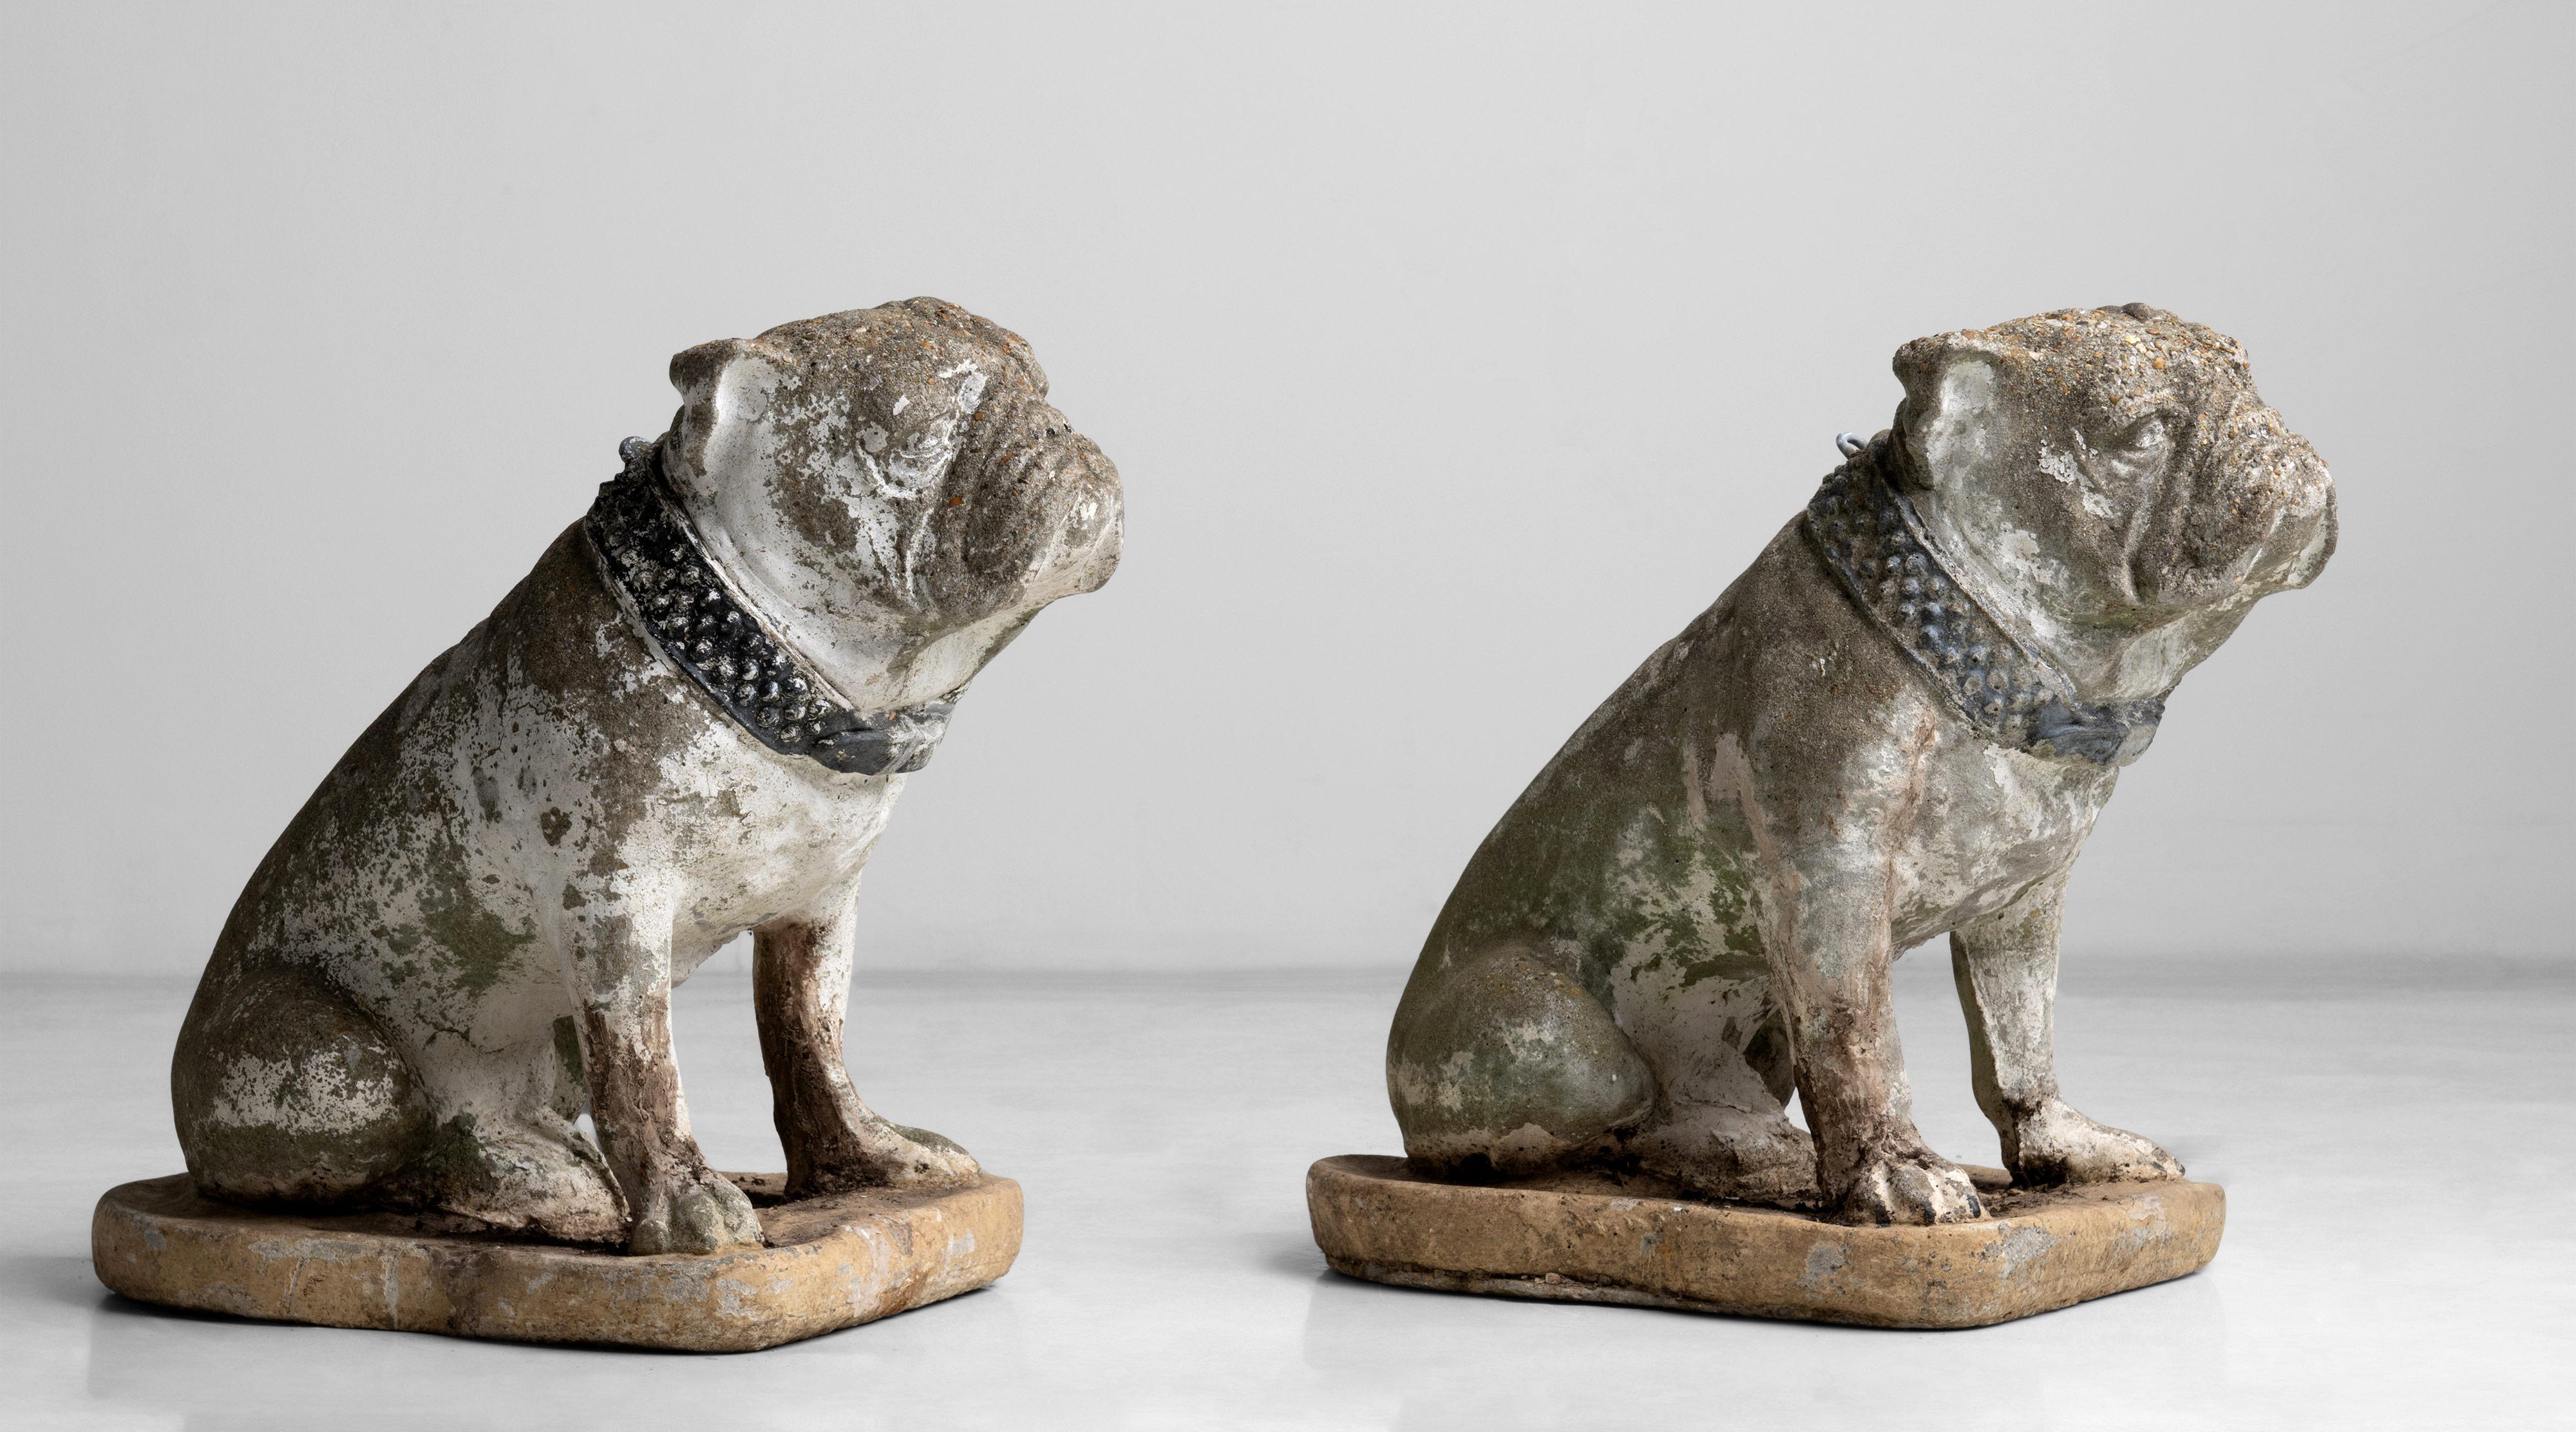 Stone Bulldogs
England circa 1900
Cast concrete bulldog with studded collar and weathered patina.